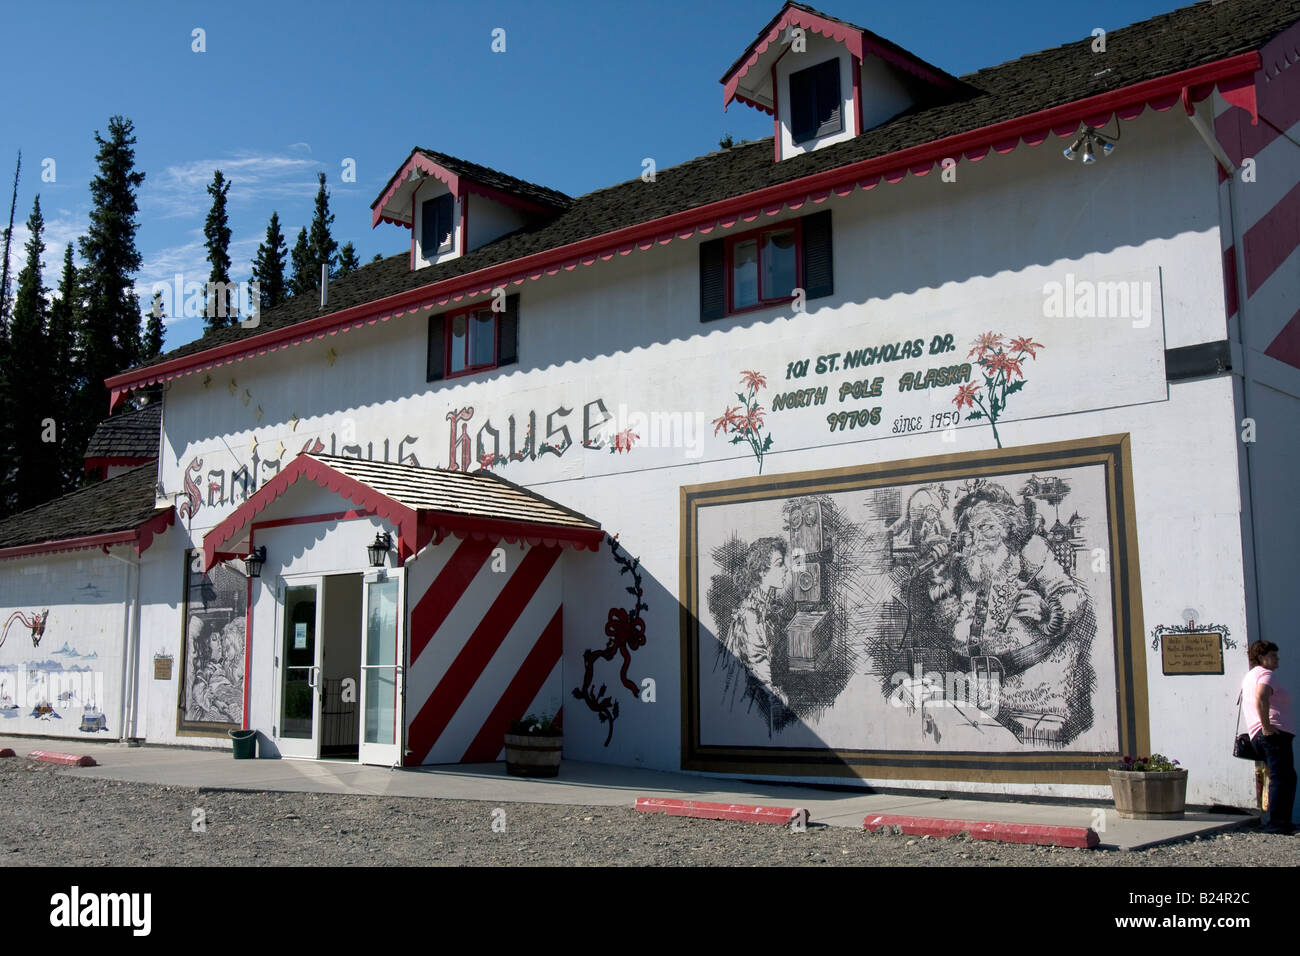 Santa Claus house in North Pole, Alaska. Stock Photo